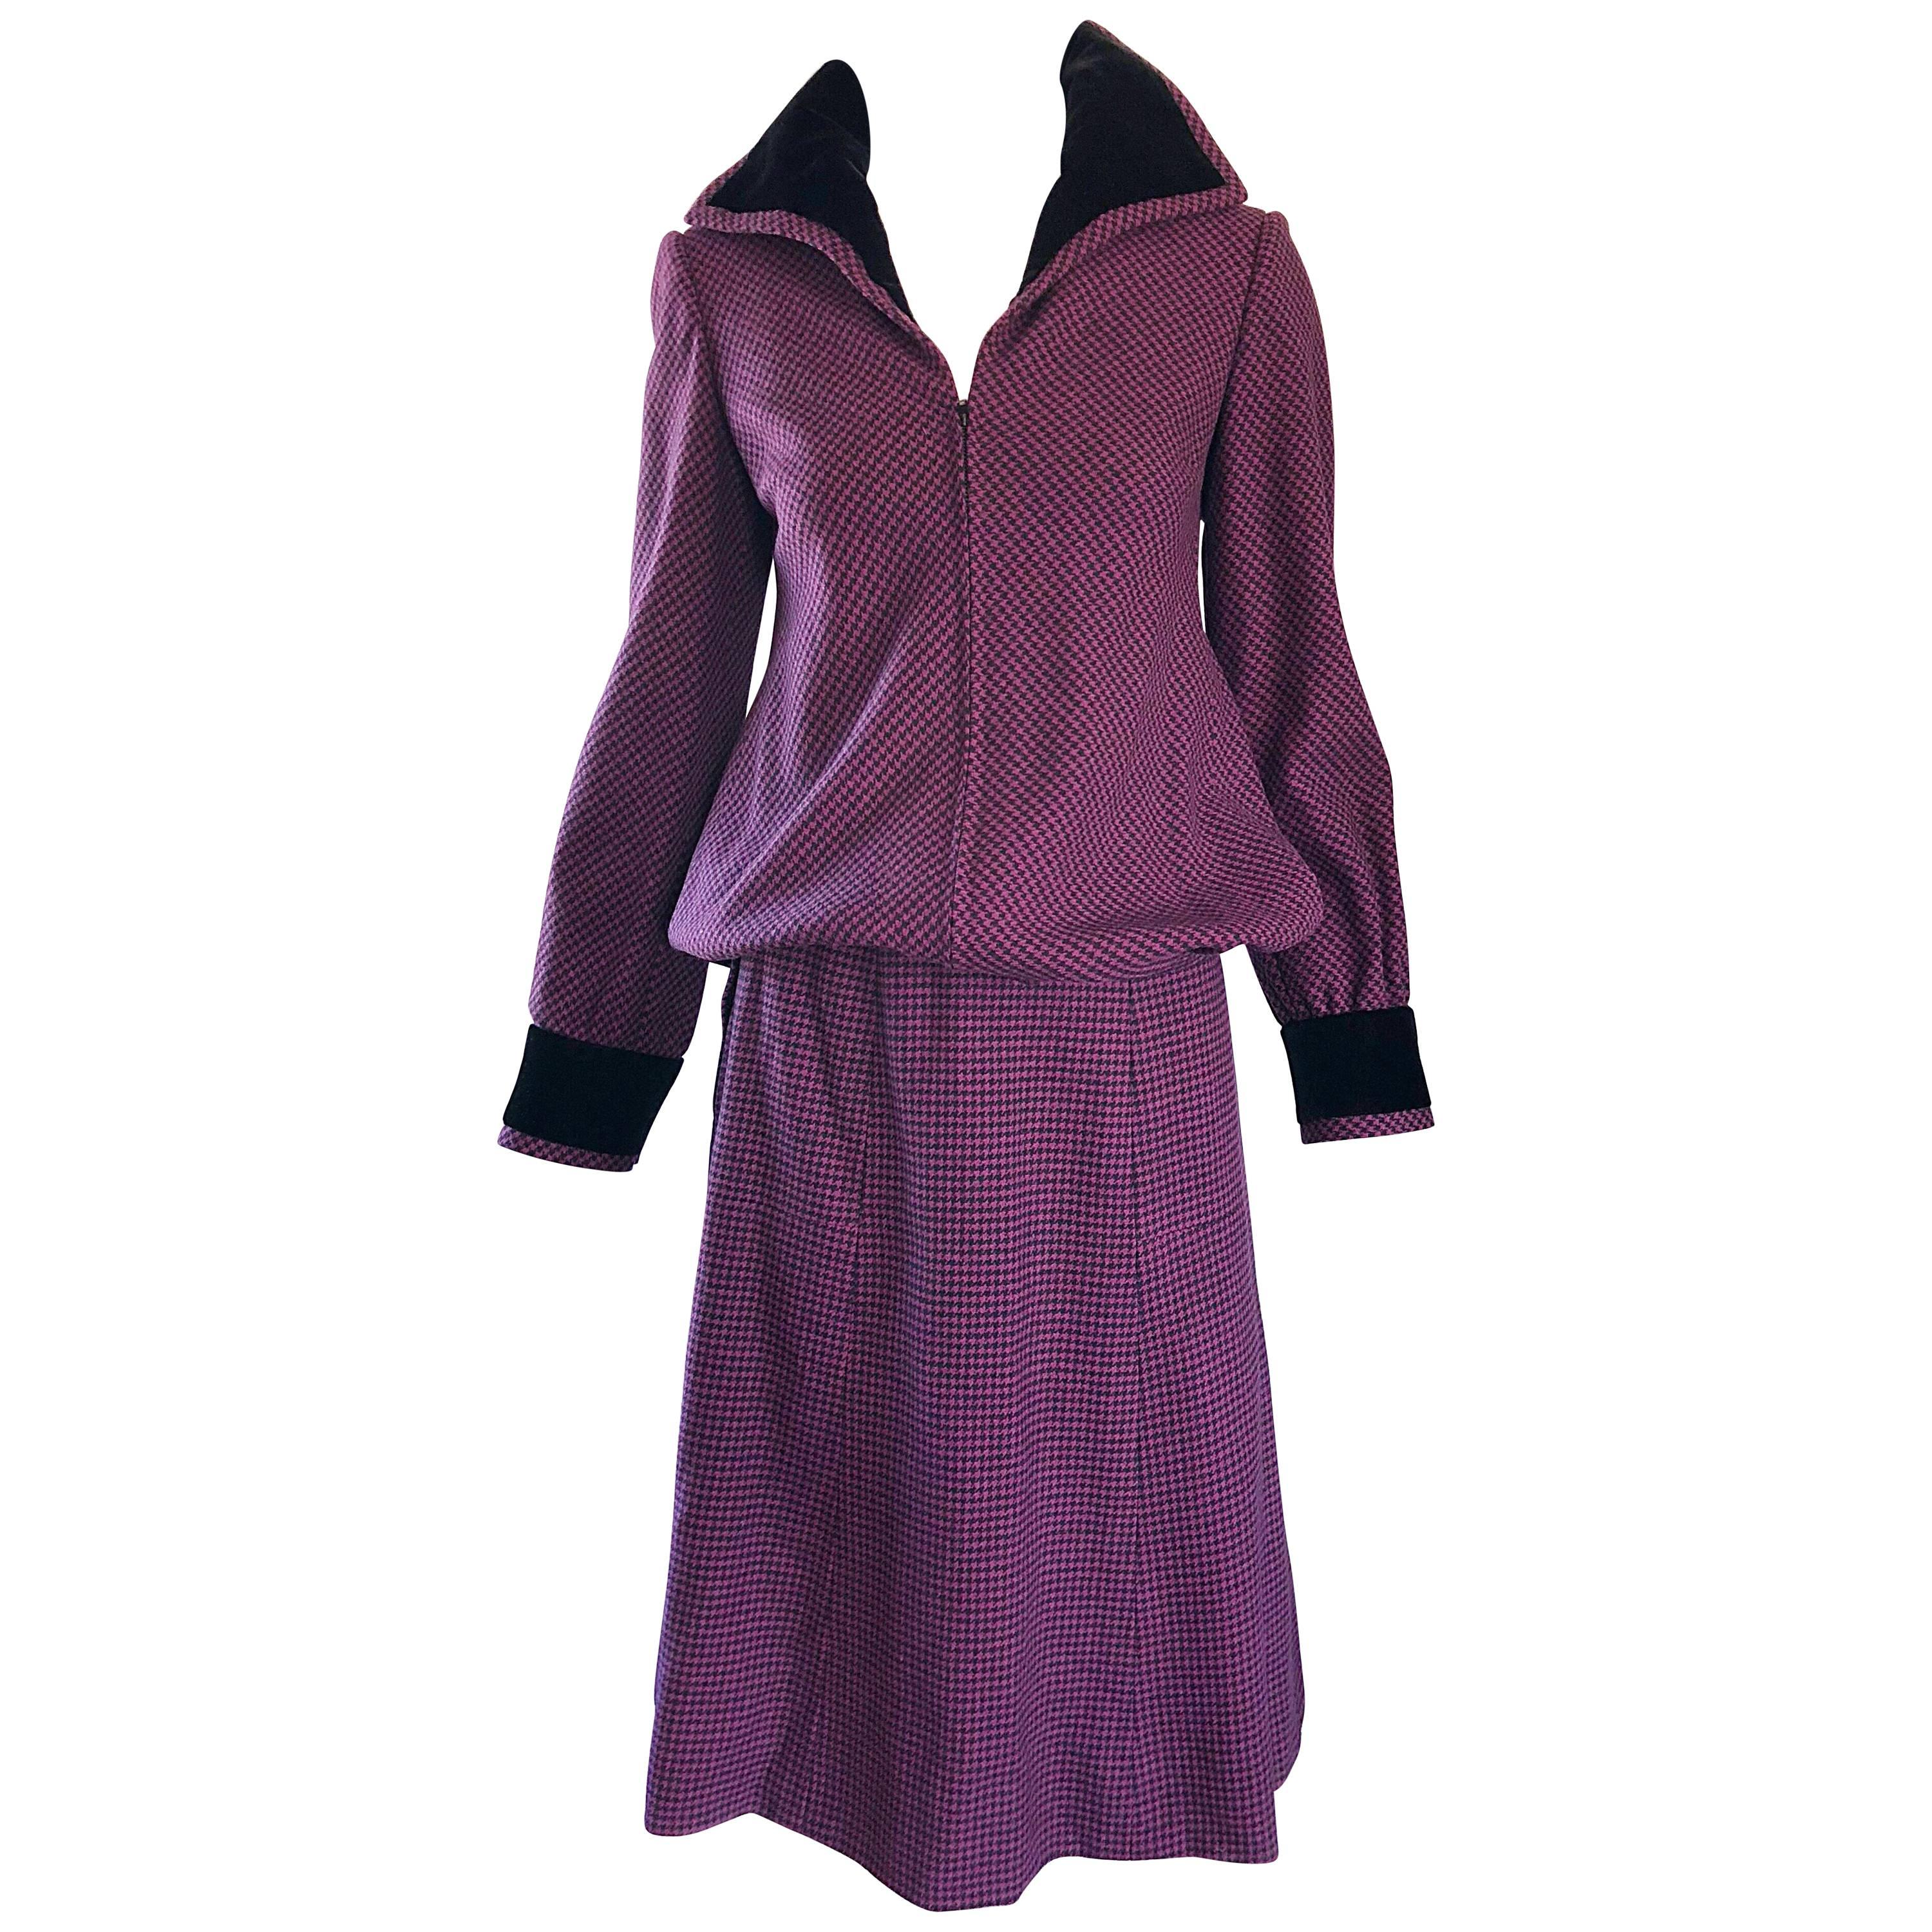 Cardinali 1970 Original Sample Purple + Black Checkered Vintage 70s Skirt Suit 